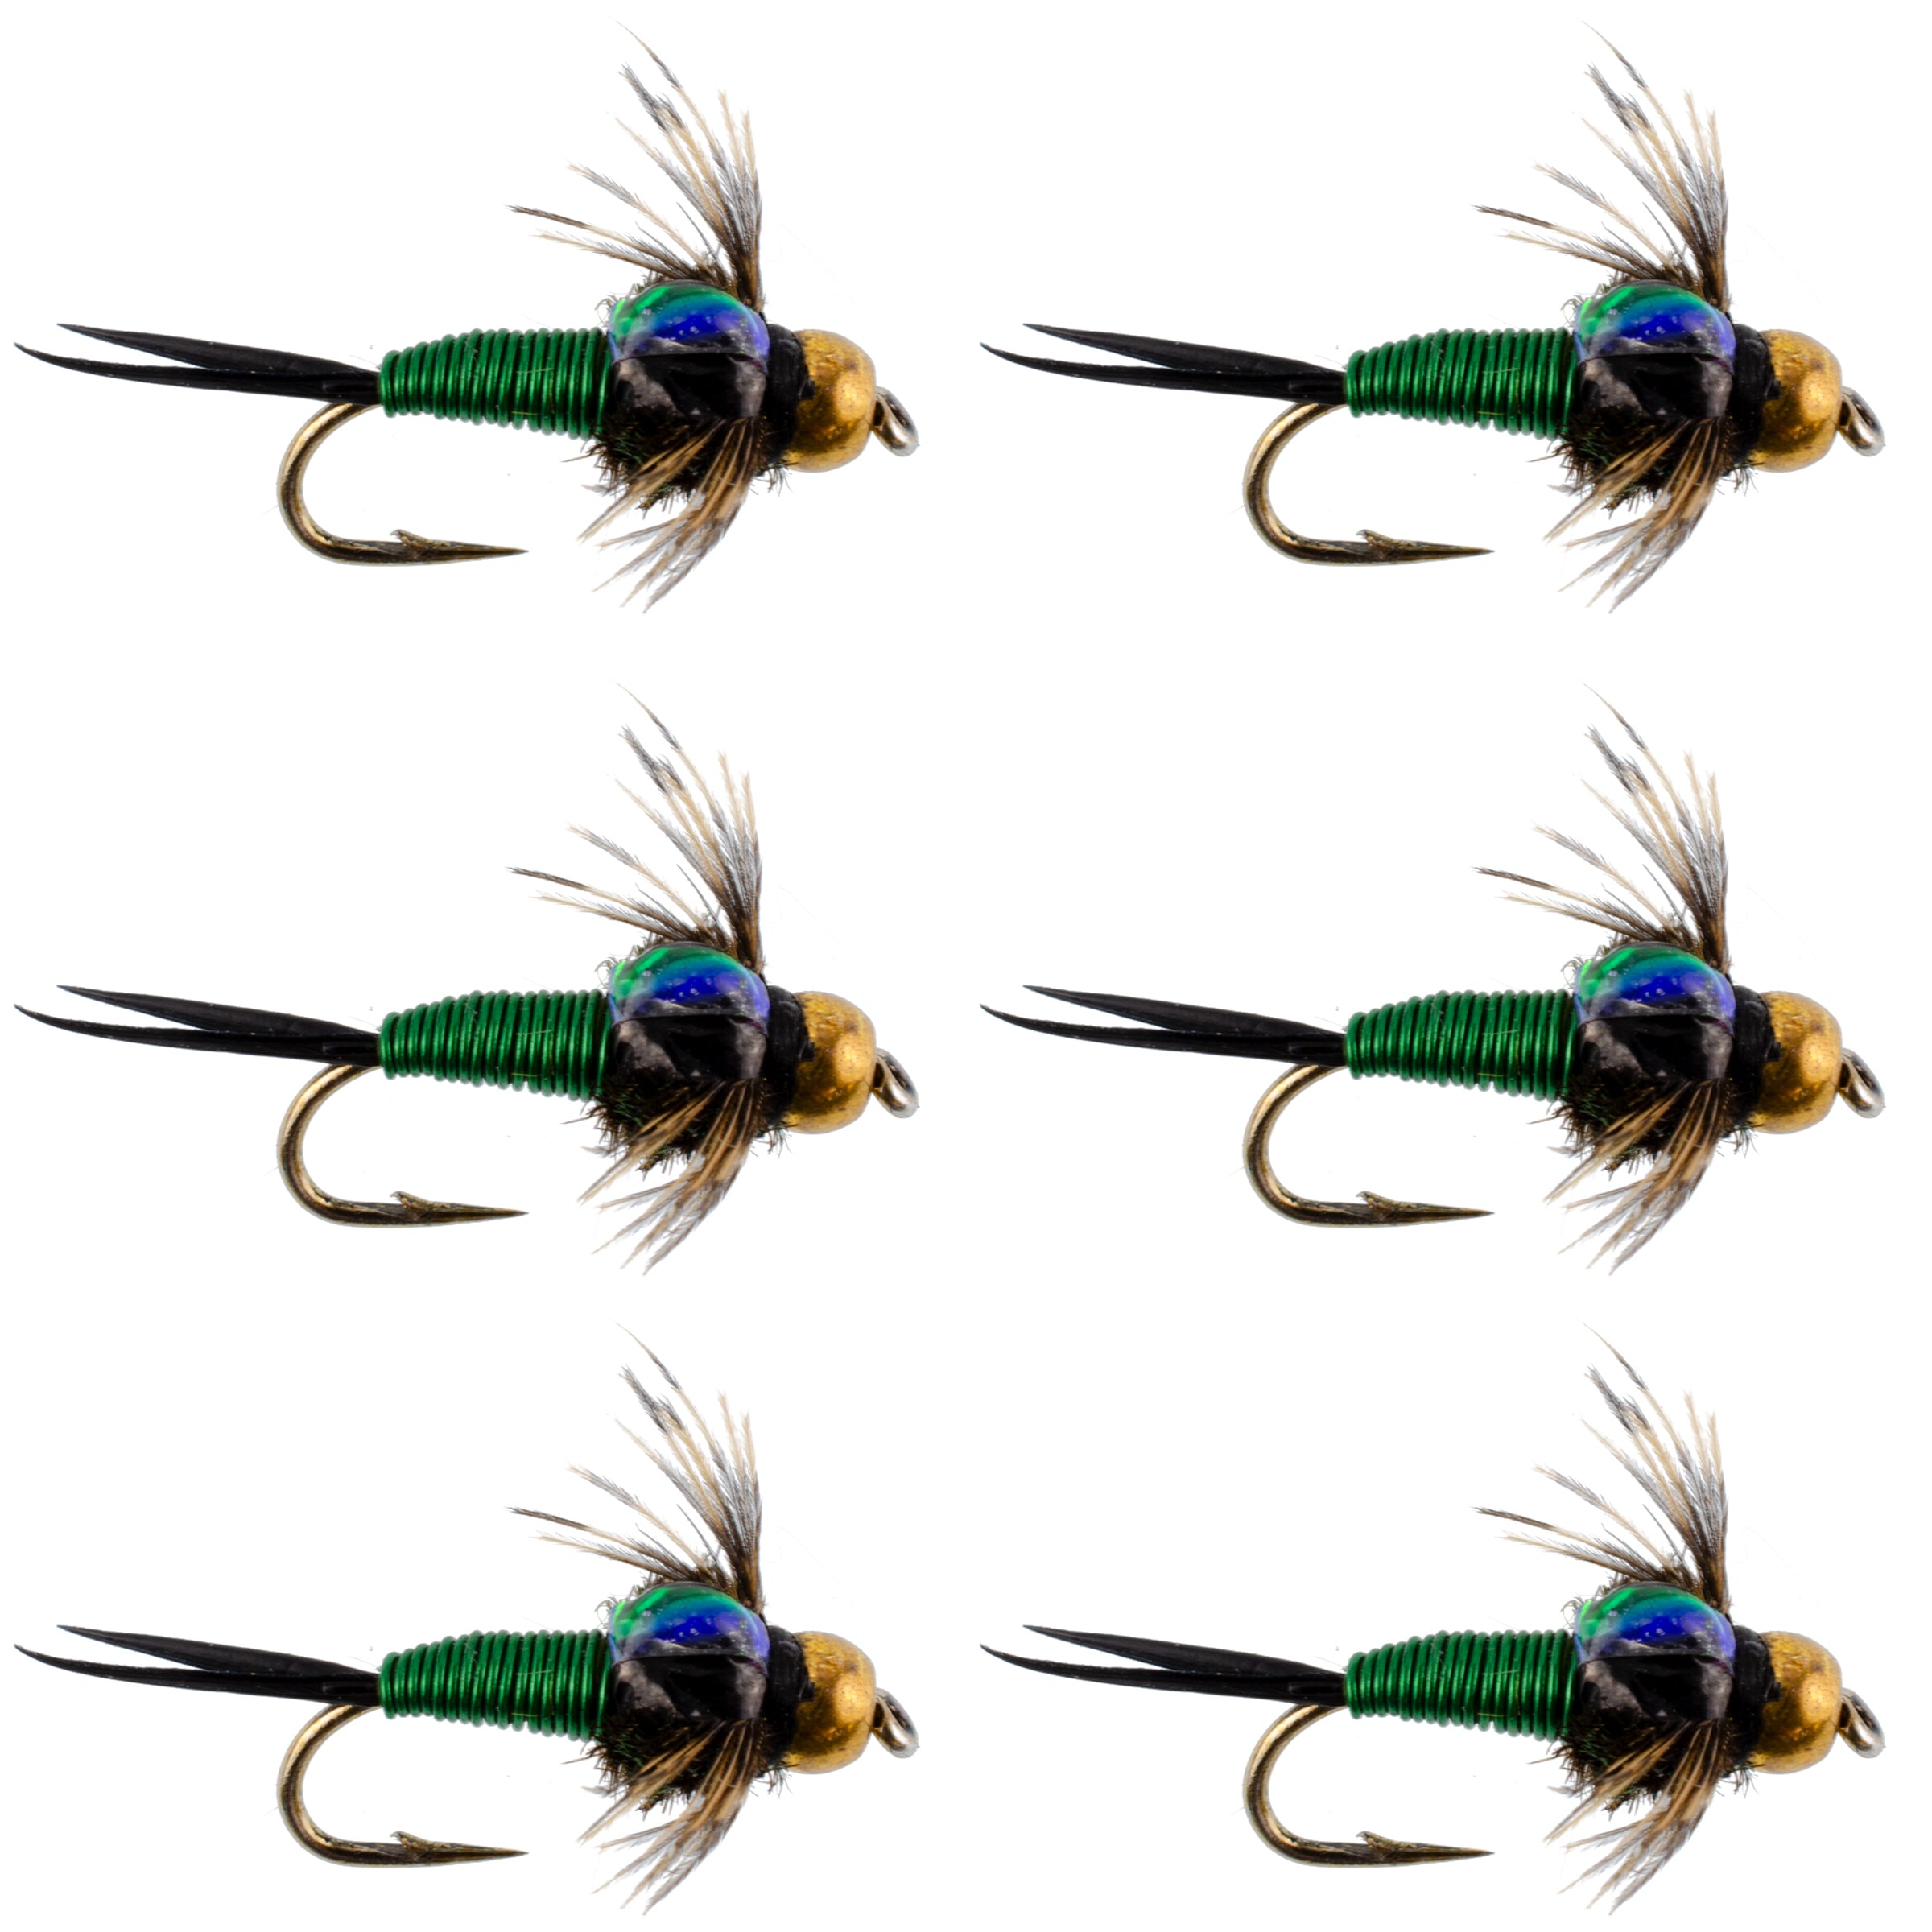 Moscas de pesca con mosca John Nymph de cobre verde con cabeza de cuentas, juego de 6 anzuelos para moscas, tamaño 14 